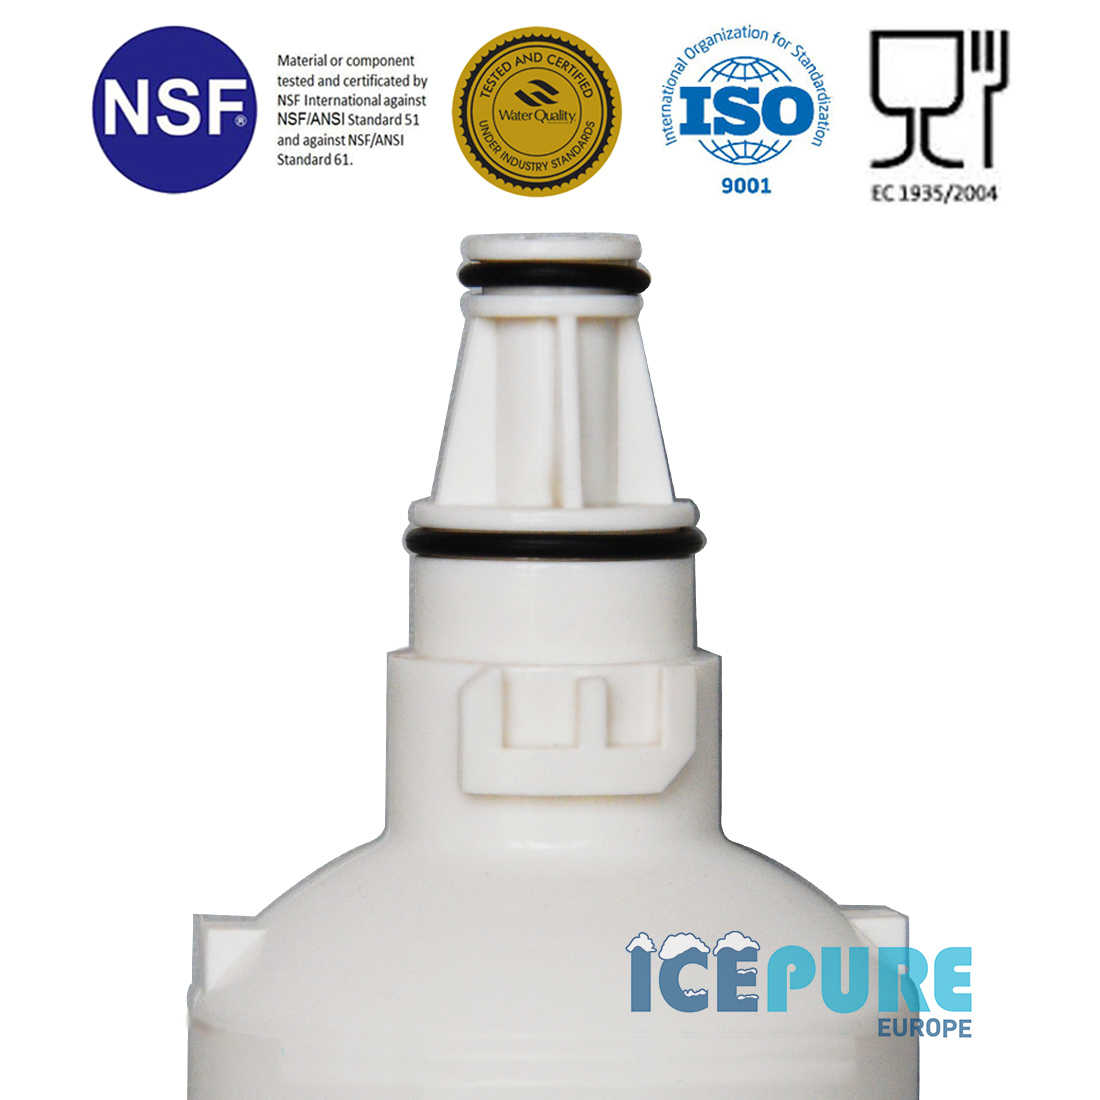 Filtre frigo americain ICEPURE RFC1000A remplace LG A0551EC